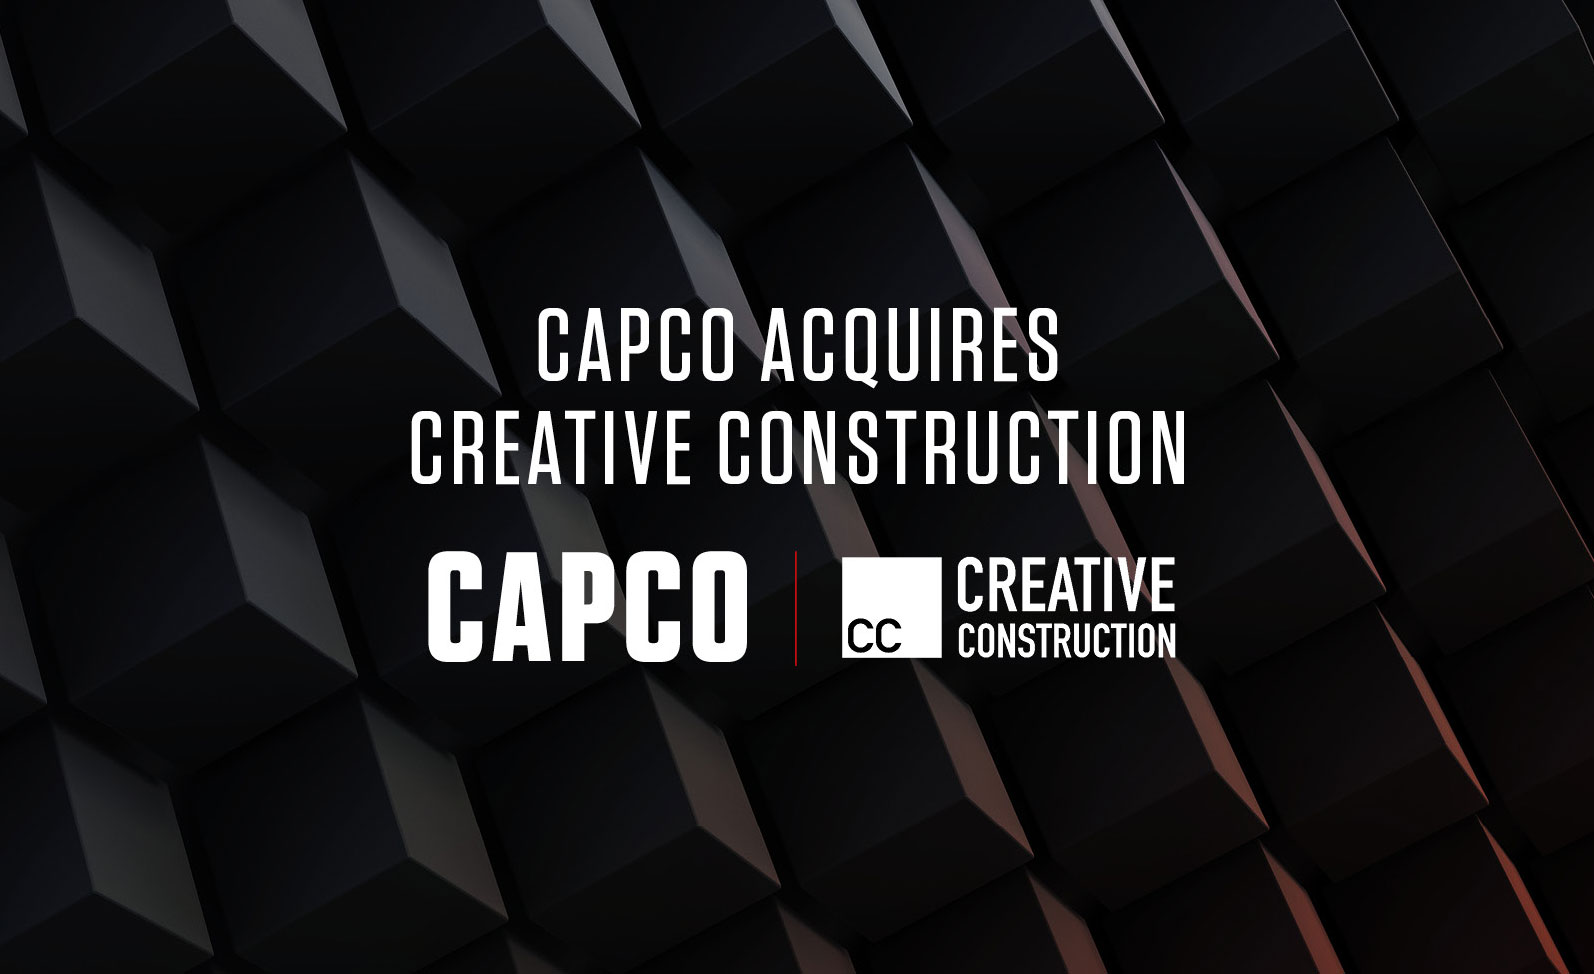 Capco acquires Creative Construction